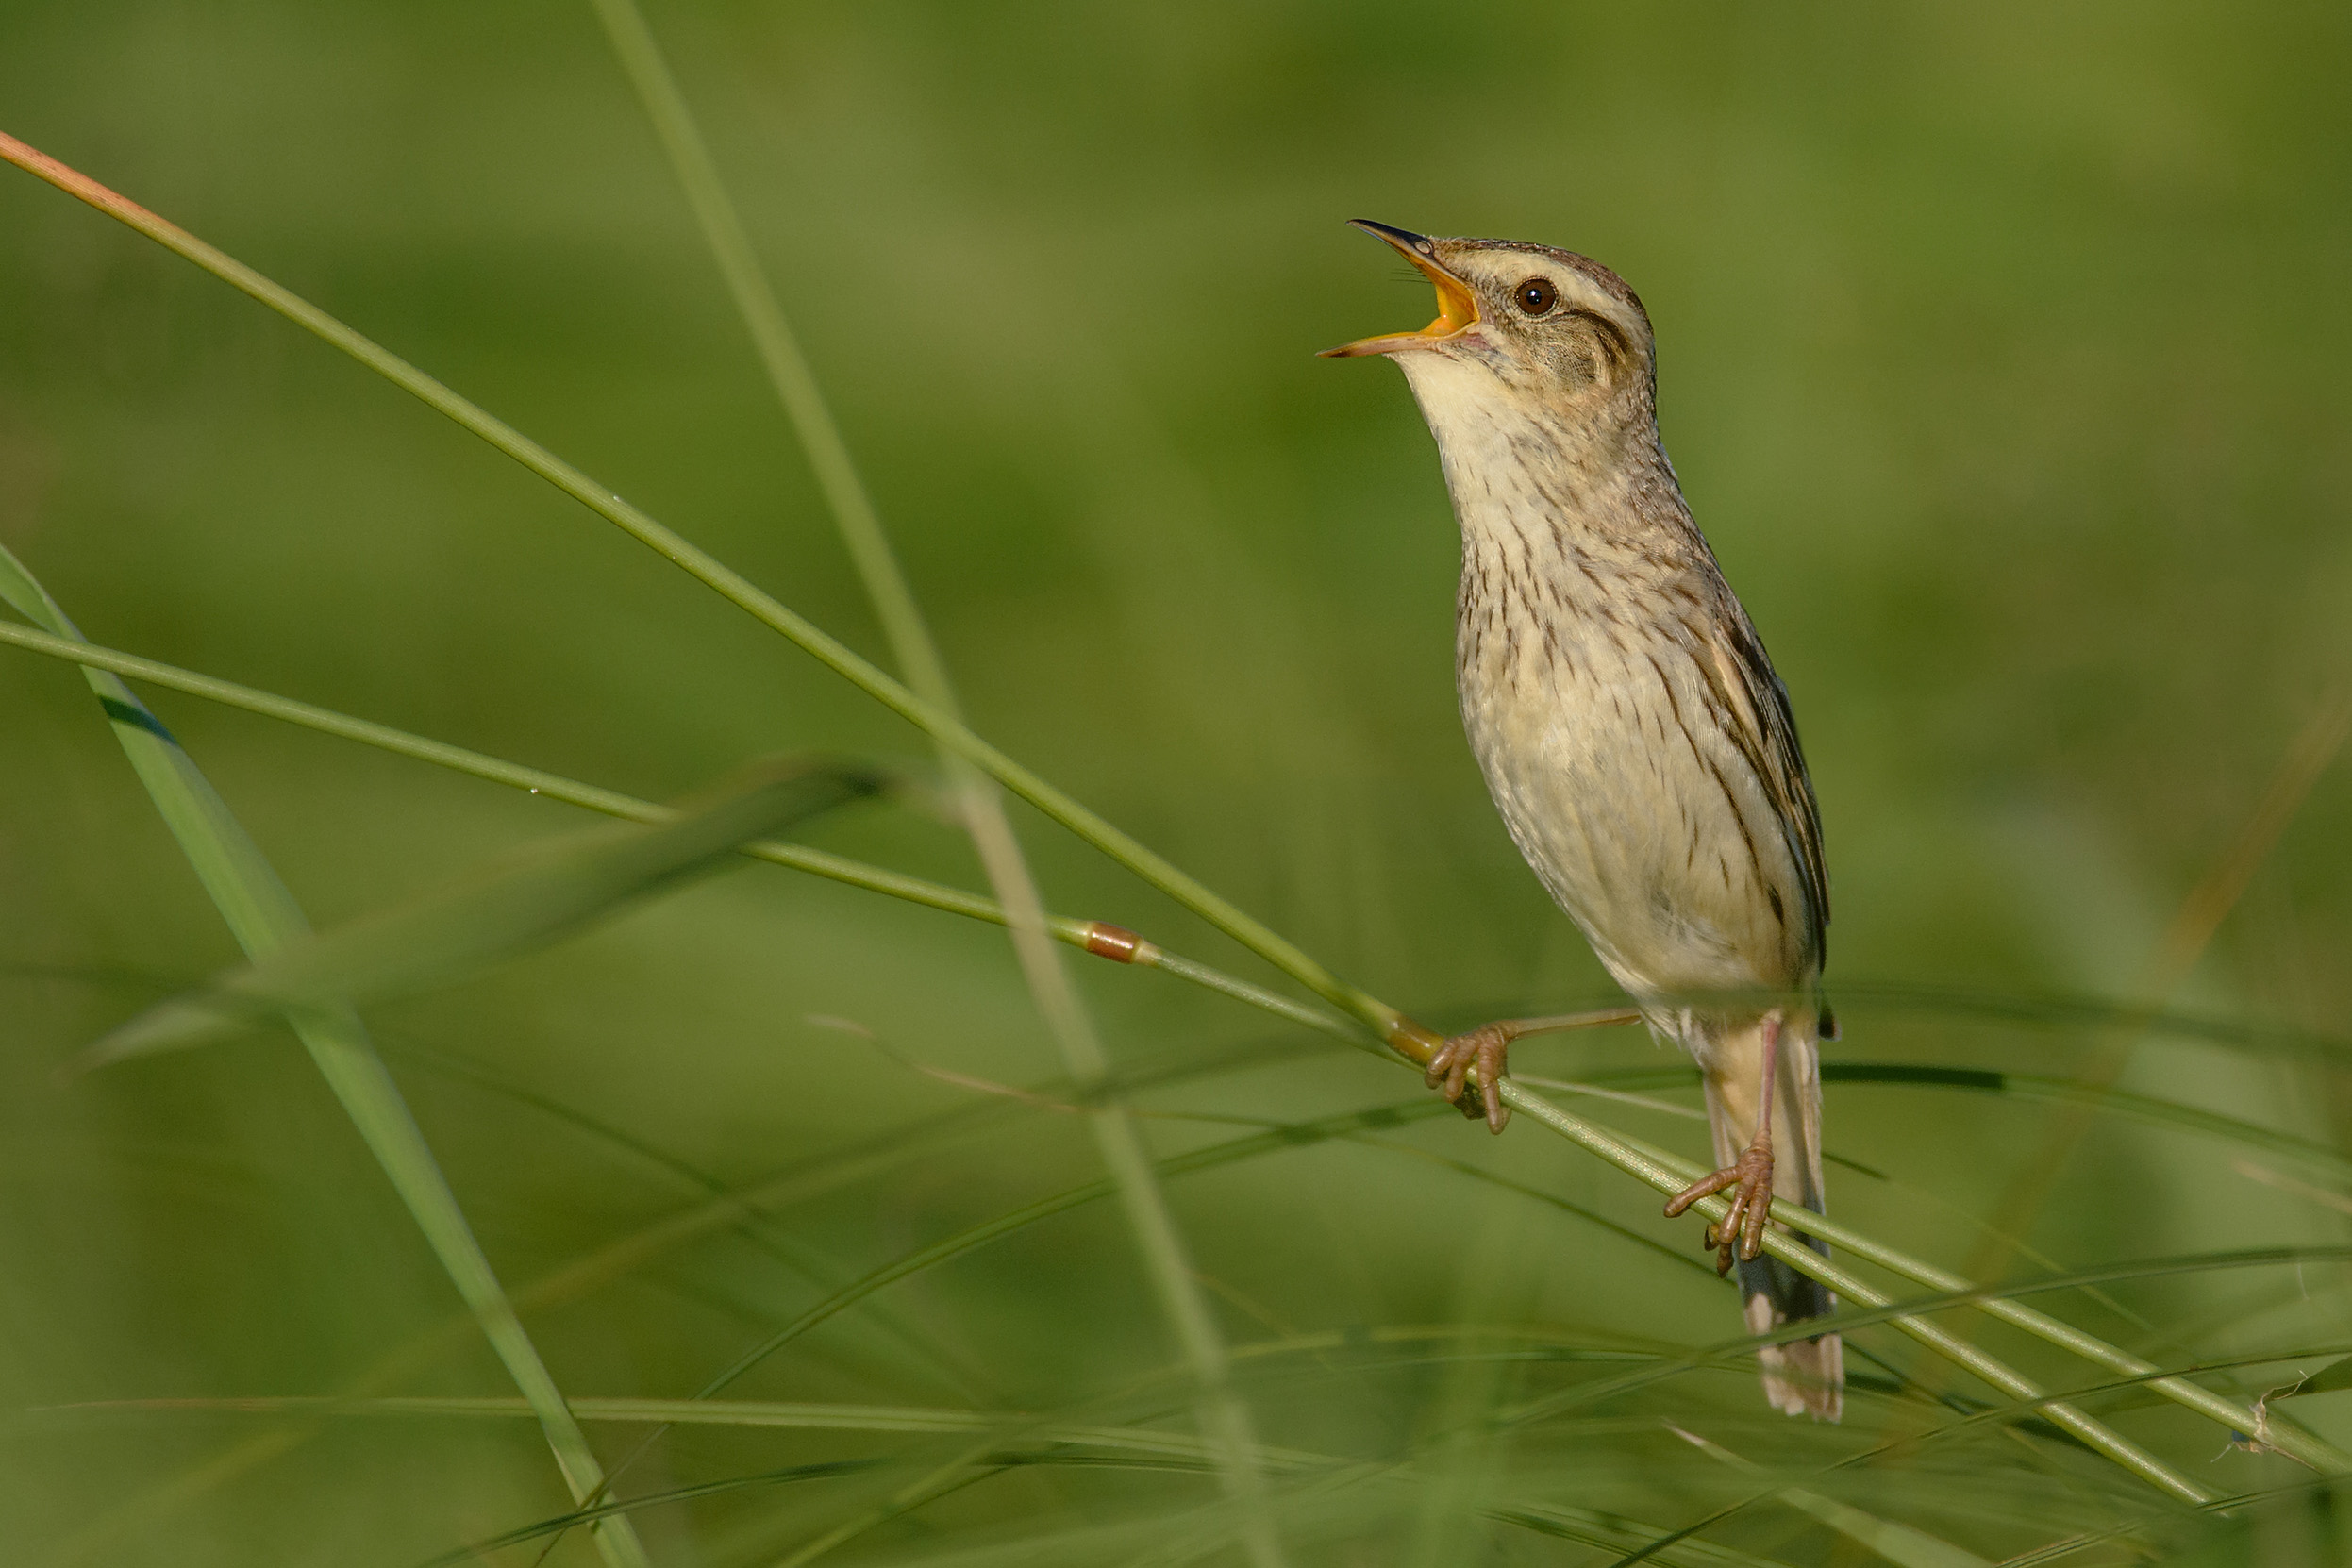 An Aquatic Warbler singing in amongst reeds.